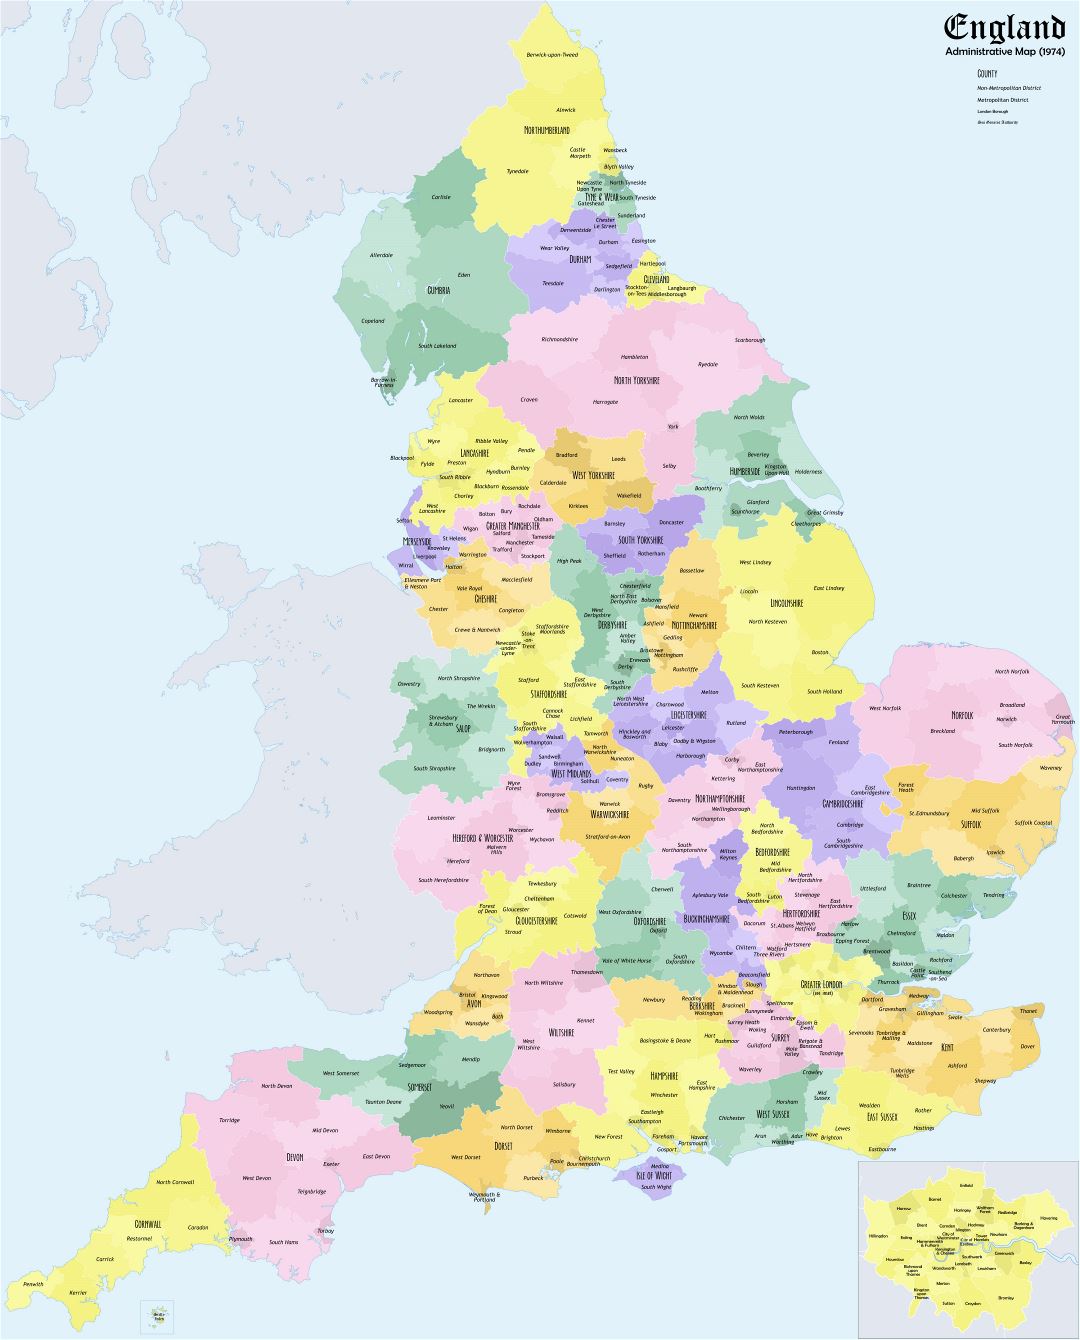 Grande detallado mapa administrativo de Inglaterra - 1974